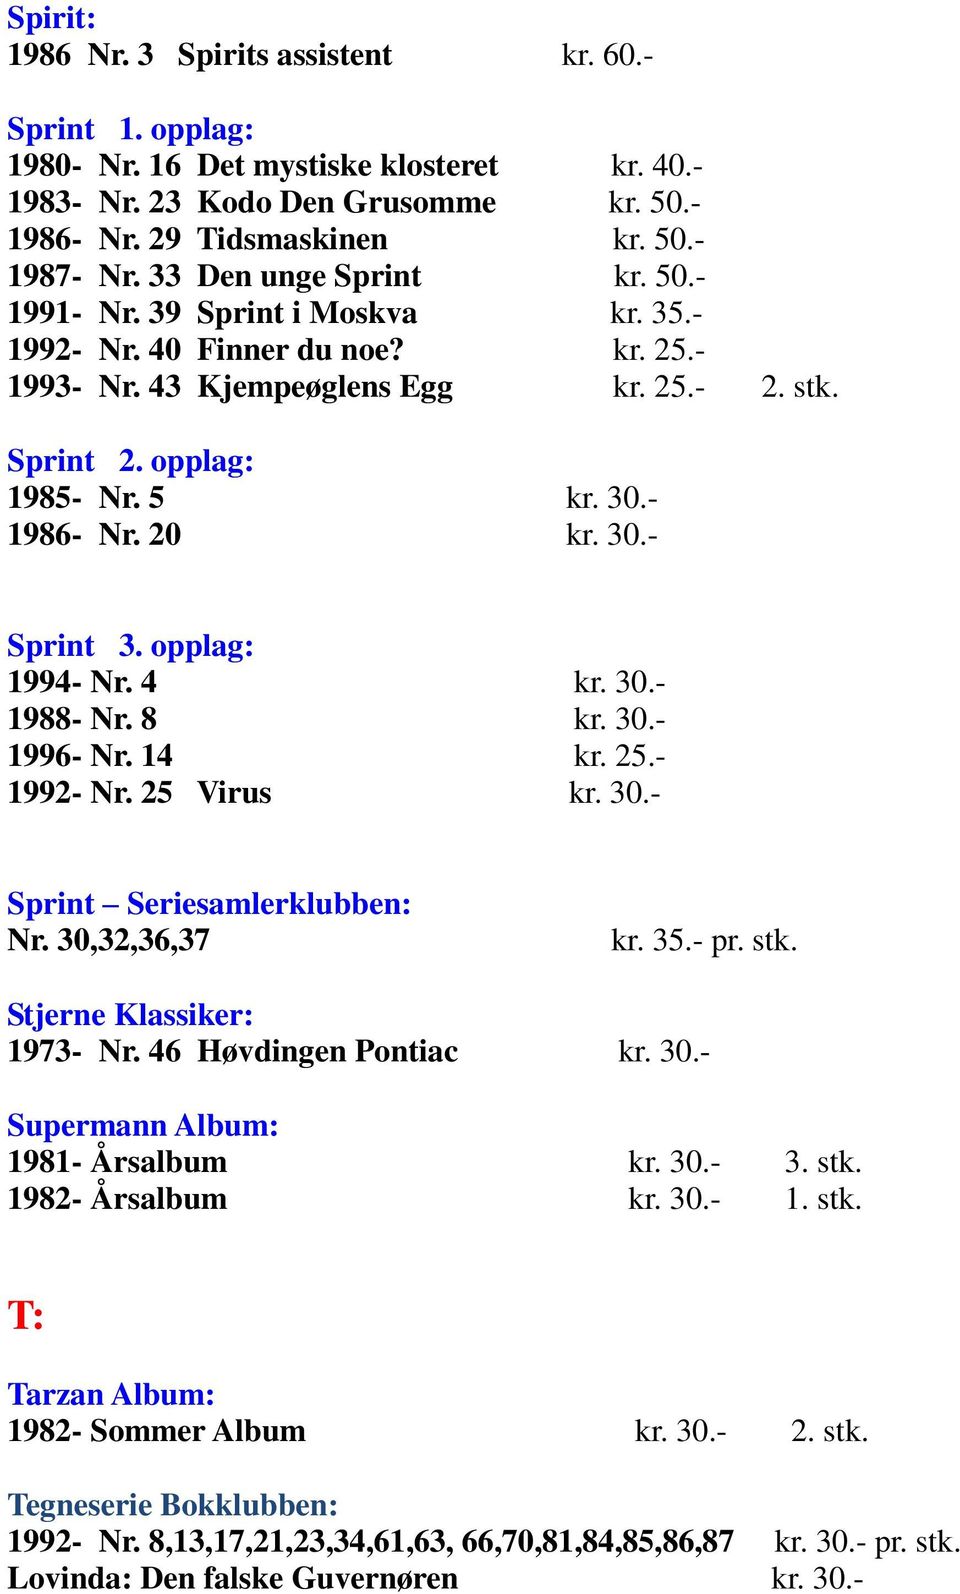 20 kr. 30.- Sprint 3. opplag: 1994- Nr. 4 kr. 30.- 1988- Nr. 8 kr. 30.- 1996- Nr. 14 kr. 25.- 1992- Nr. 25 Virus kr. 30.- Sprint Seriesamlerklubben: Nr. 30,32,36,37 kr. 35.- pr. stk.